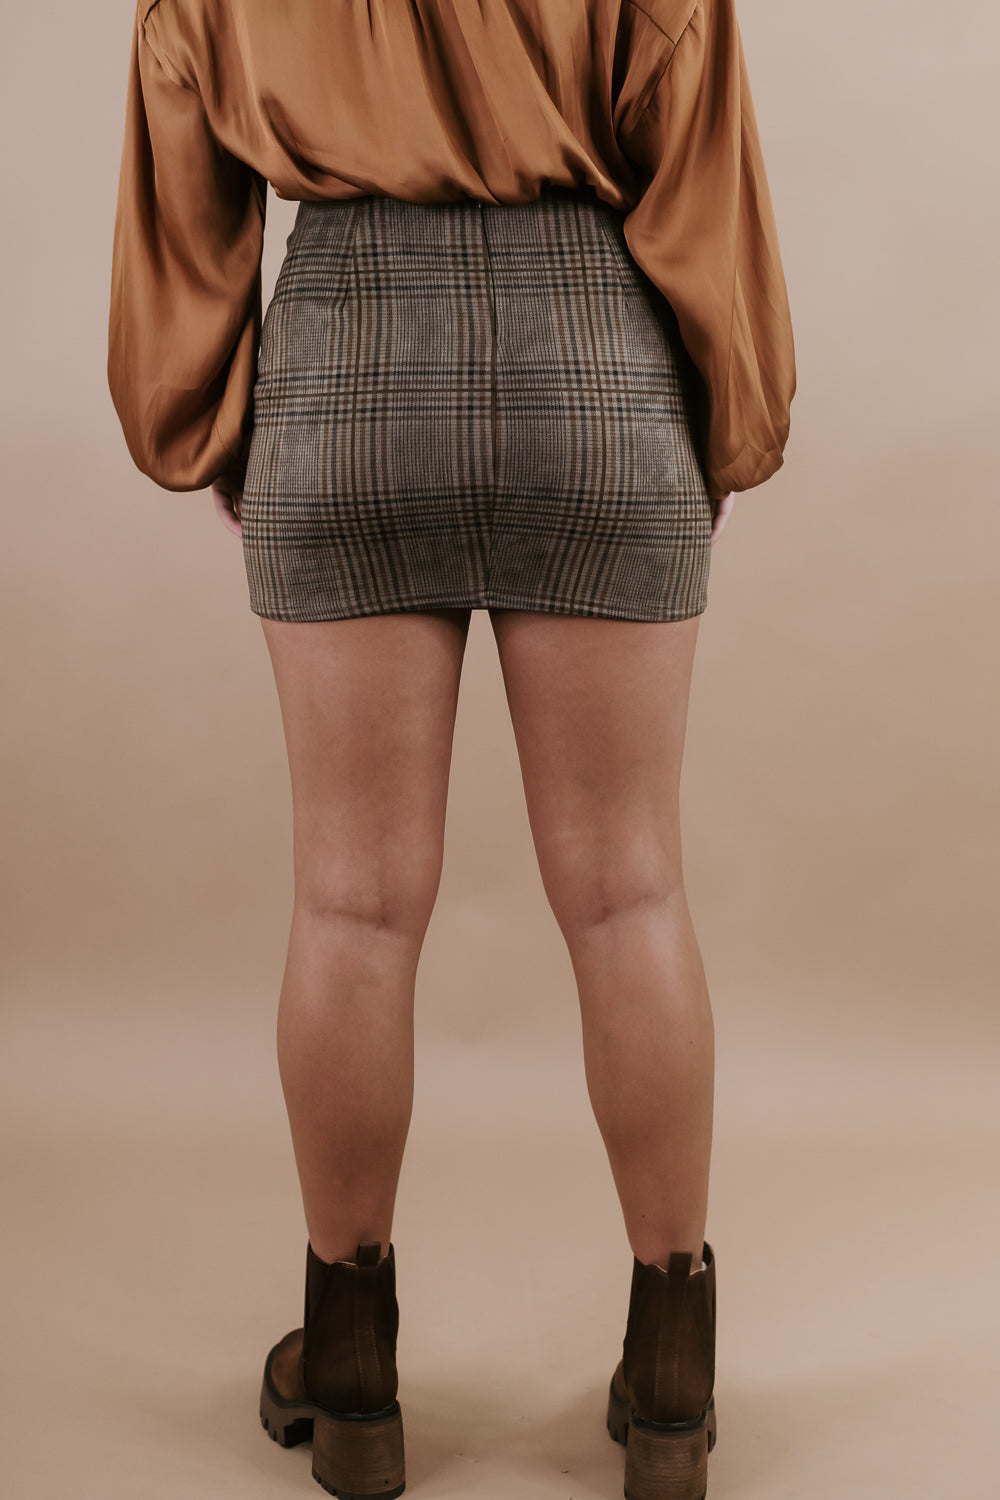 Deja Vu Plaid Mini Skirt, Olive Plaid